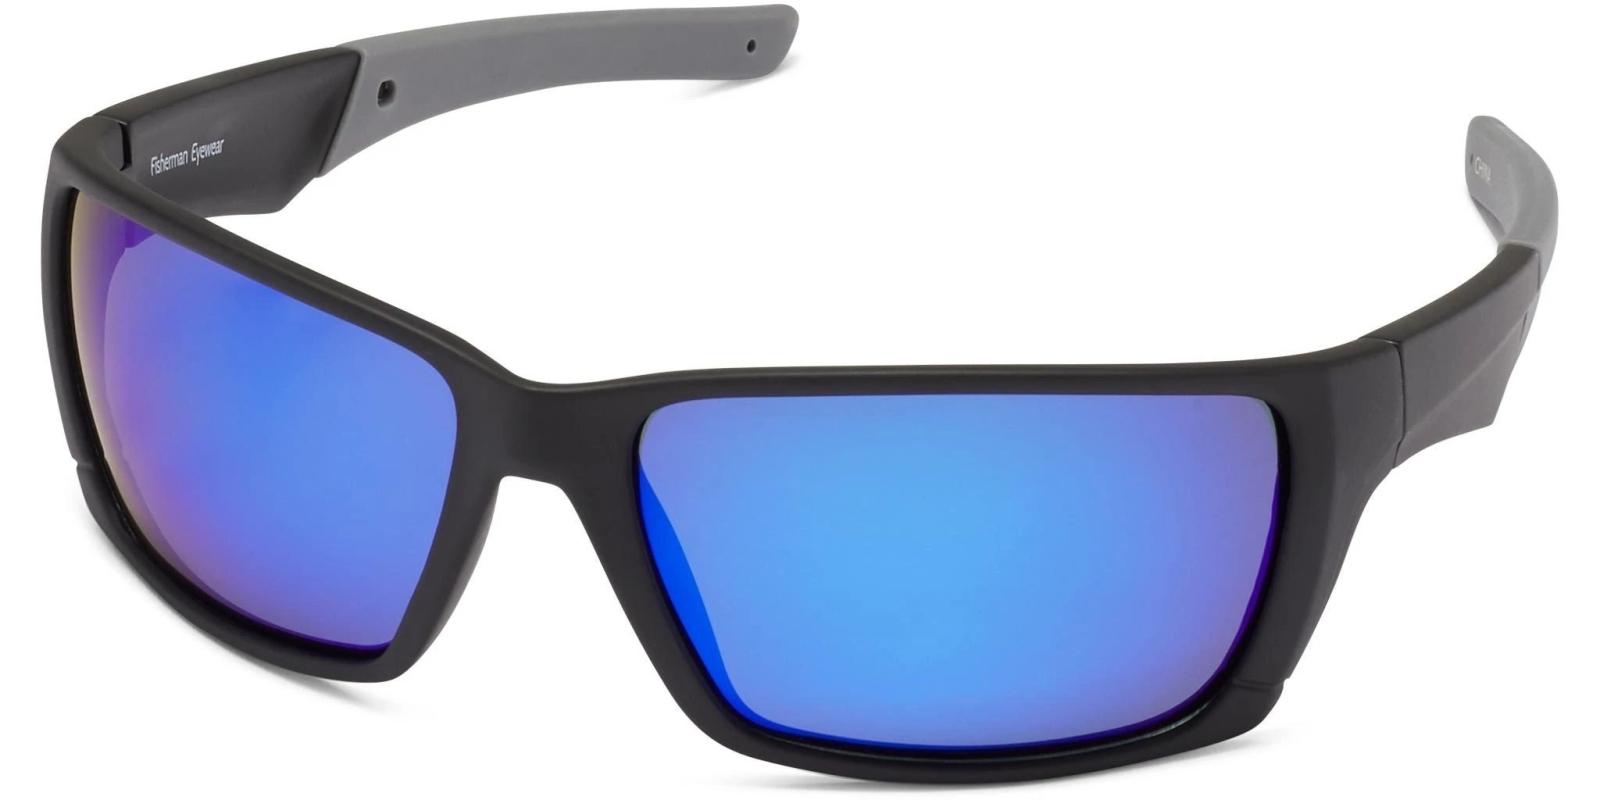 icu Eyewear Hook Sunglasses